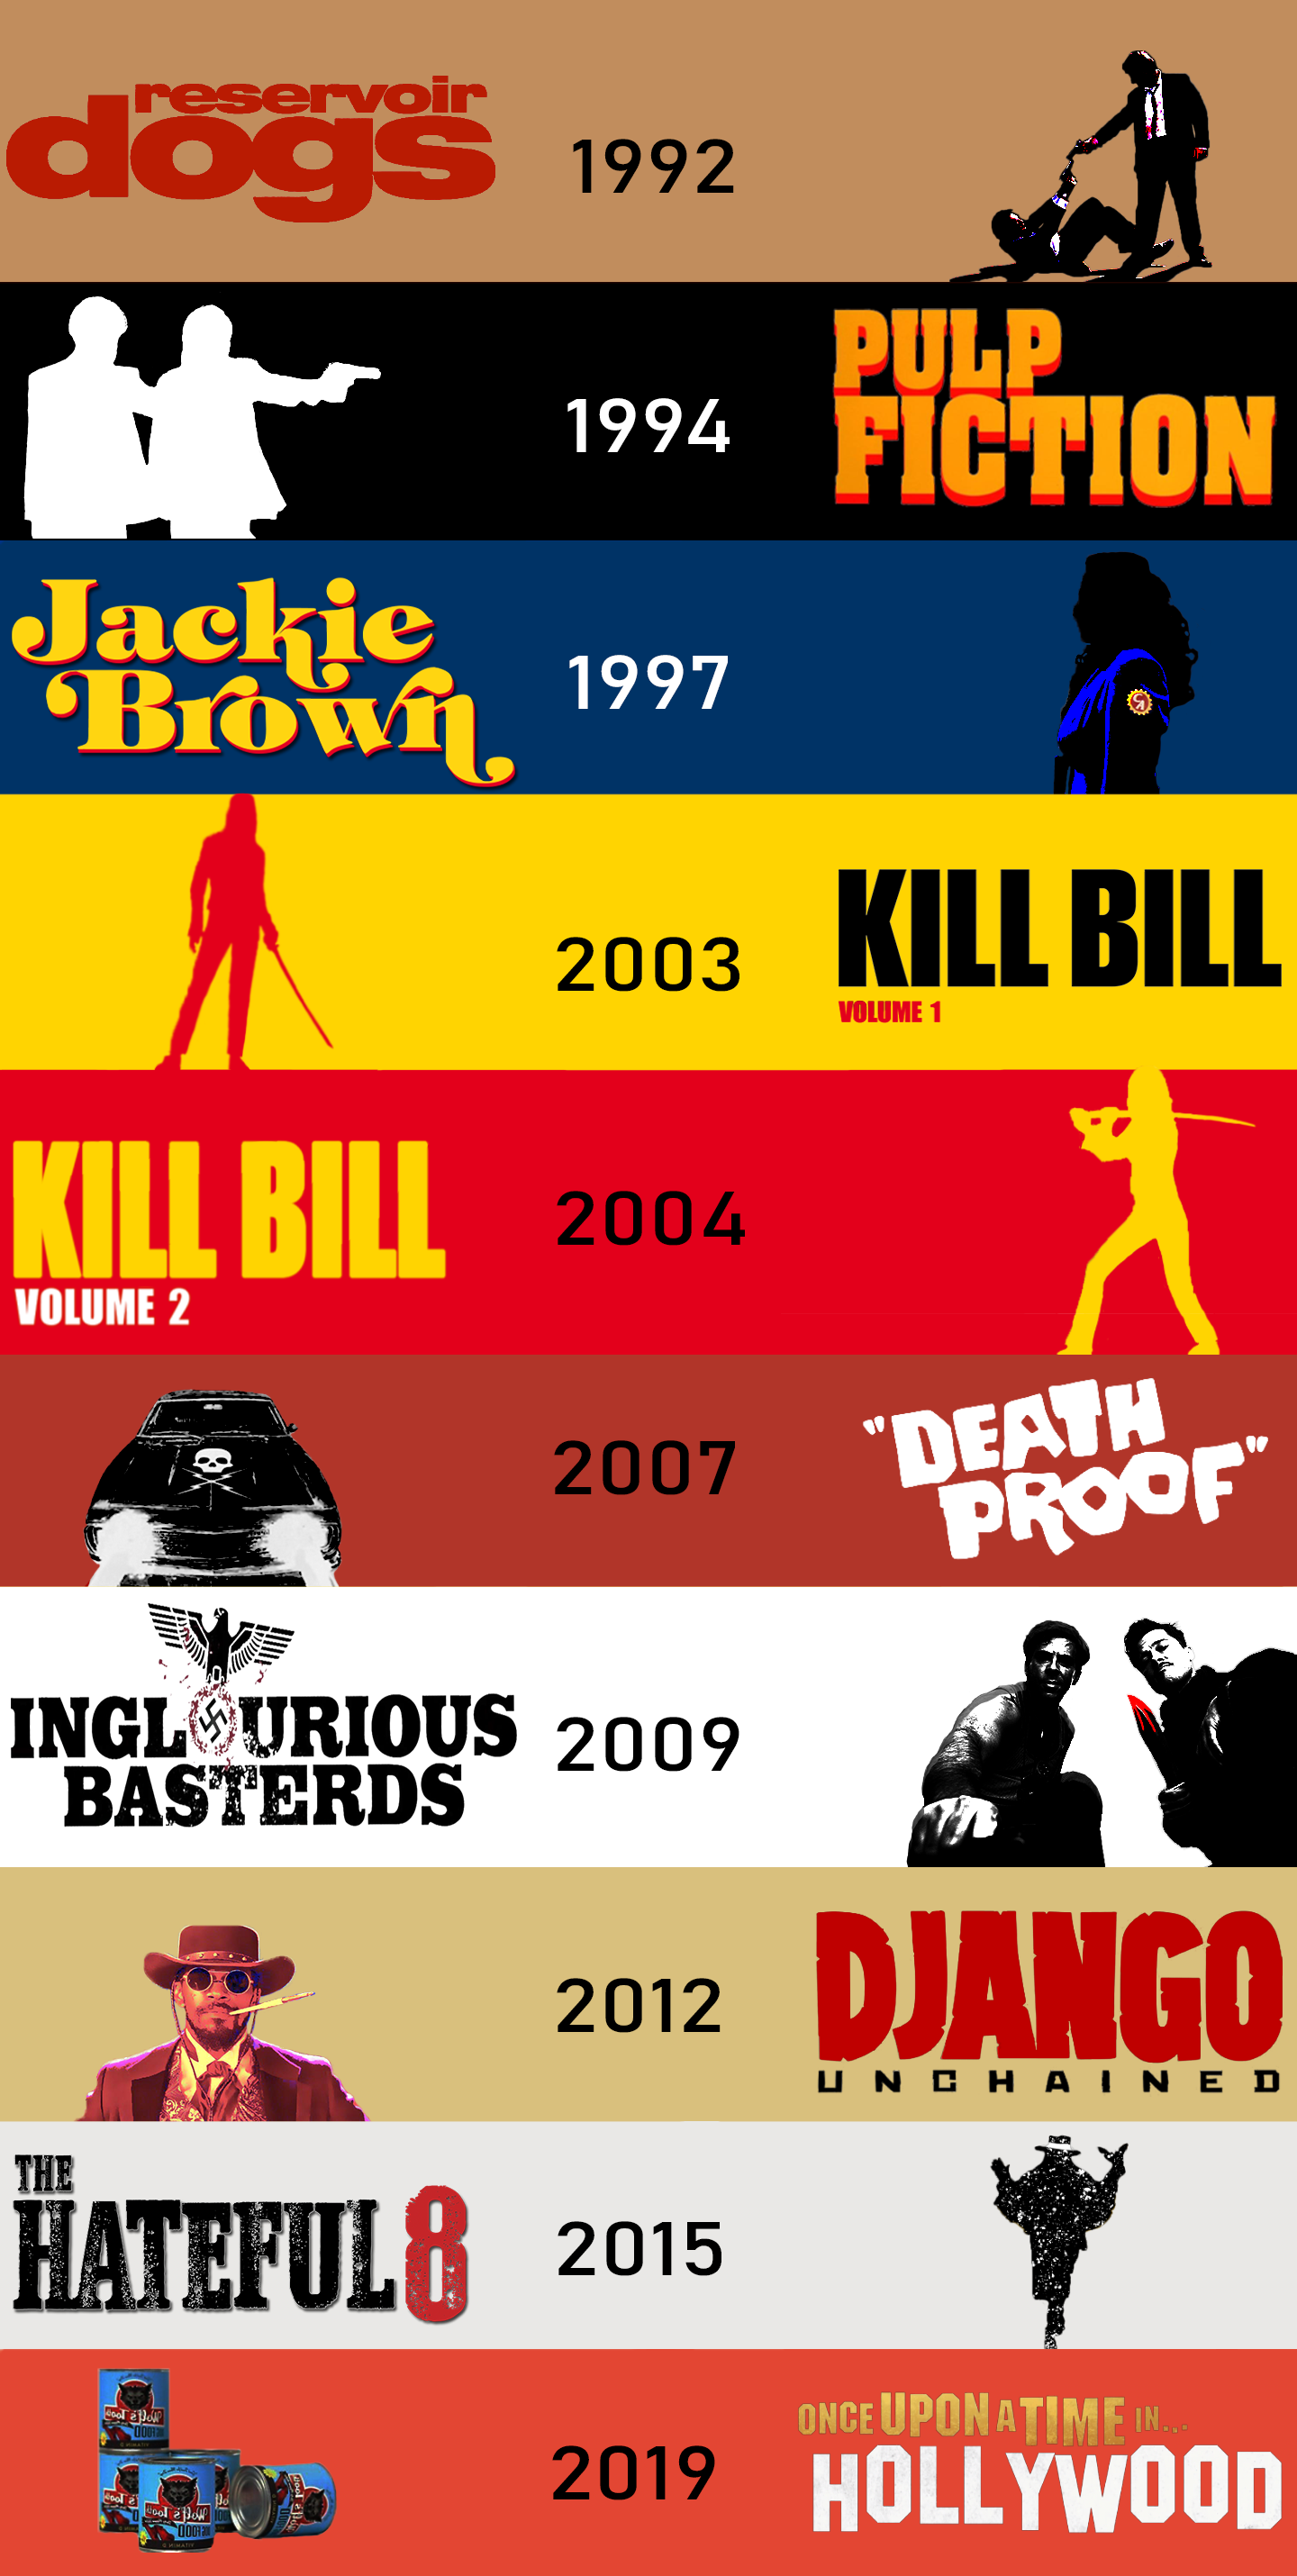 Infographic I made on Quentin Tarantino's films. Quentin tarantino movies, Quentin tarantino films, Tarantino films